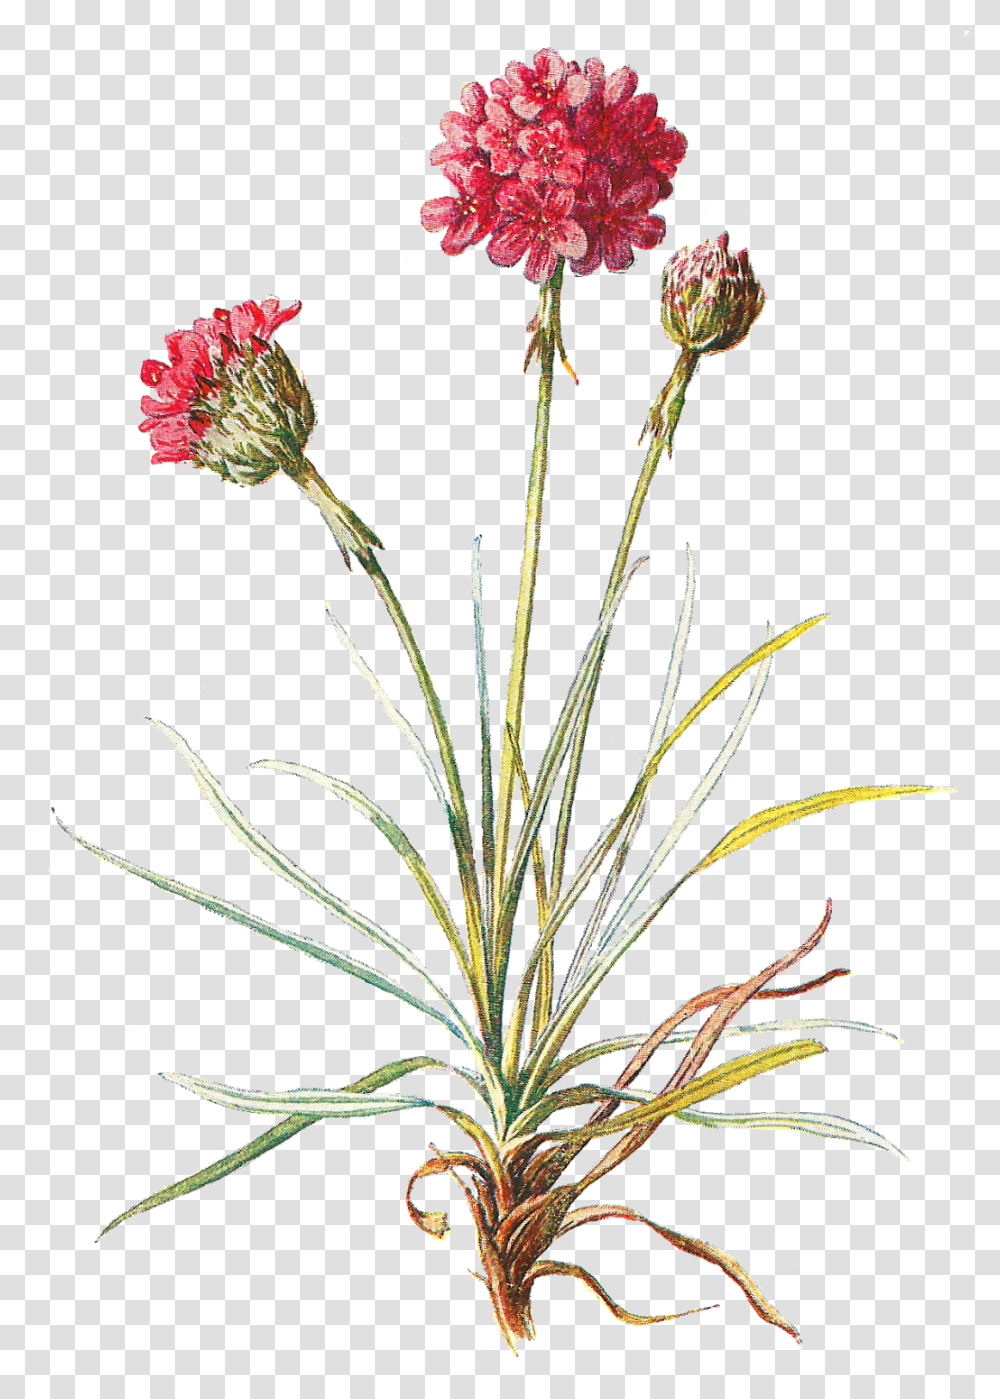 Clip Freeuse Antique Images Wildflower Stock Image Vintage Botanical Flower, Plant, Blossom, Thistle, Bud Transparent Png